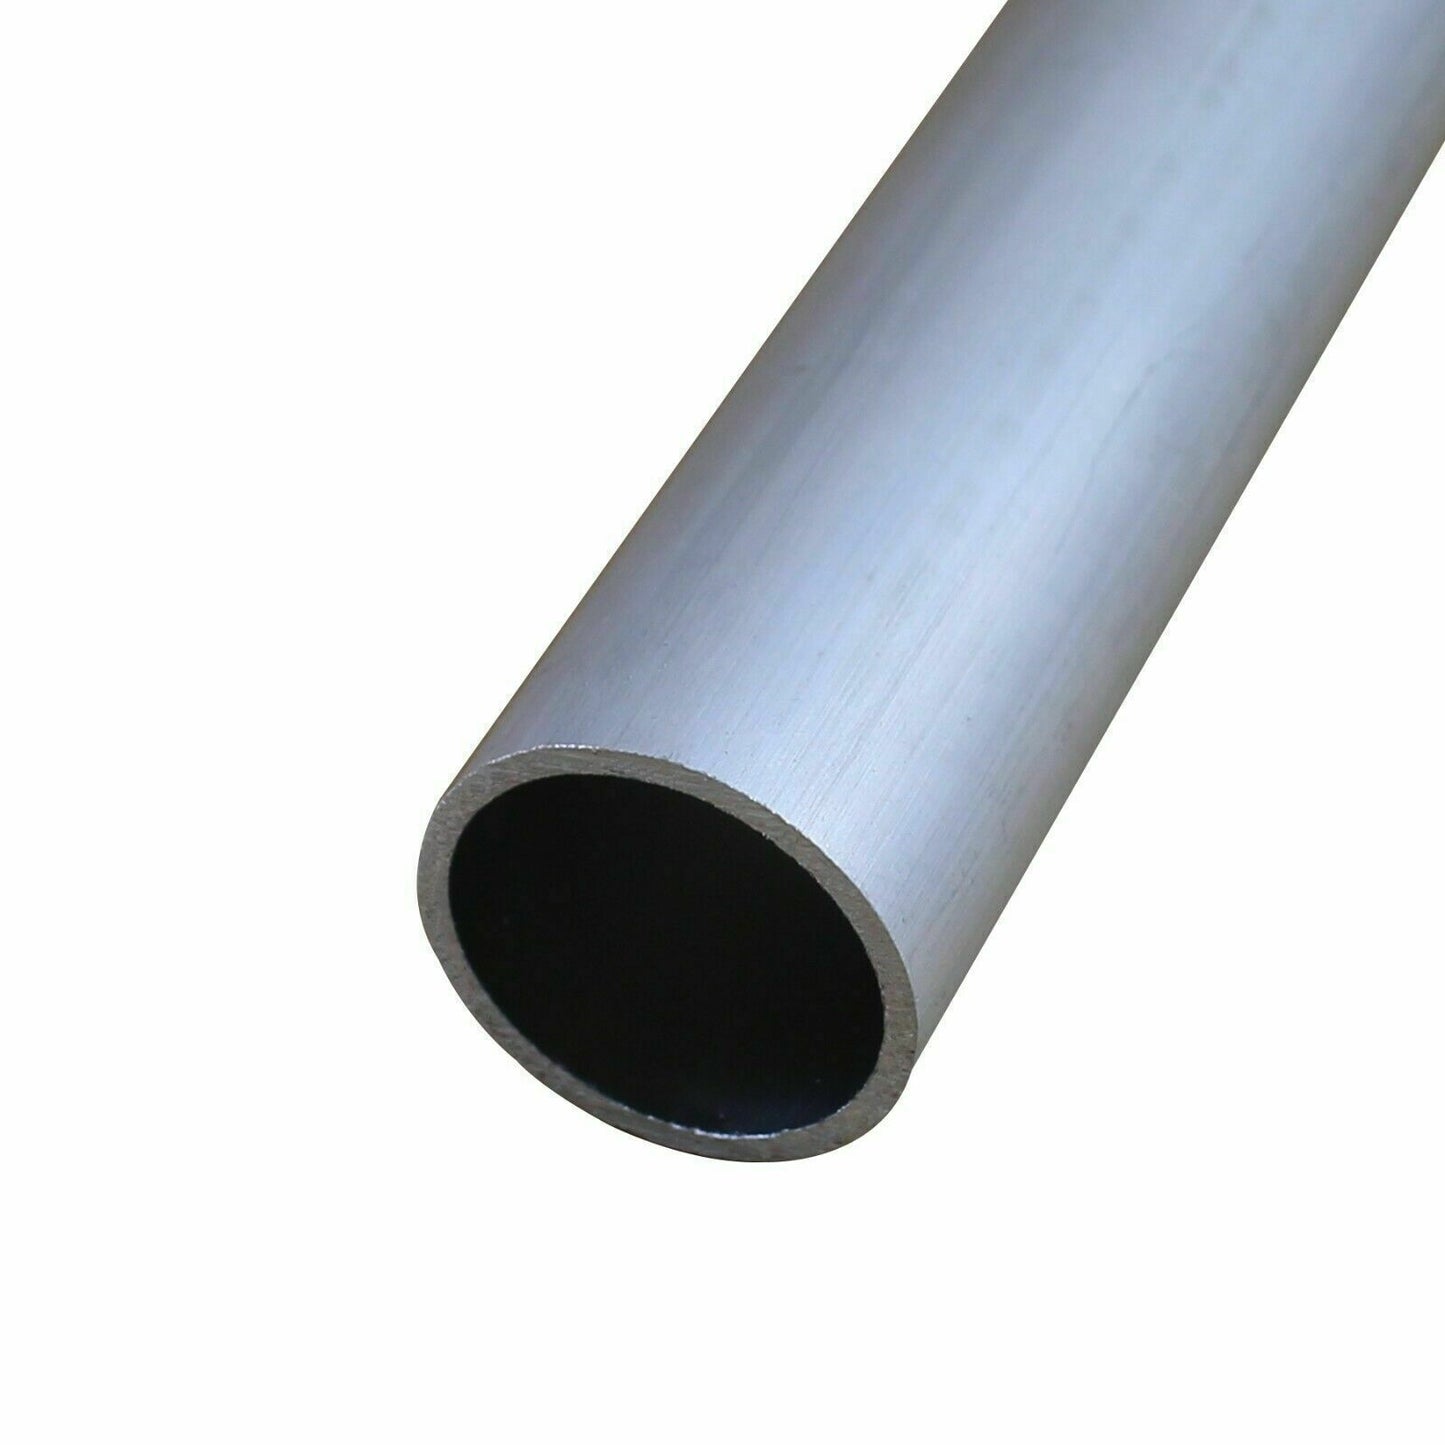 OD 40 mm ID 34 mm 1 Pcs Aluminum Round Tube Pipe